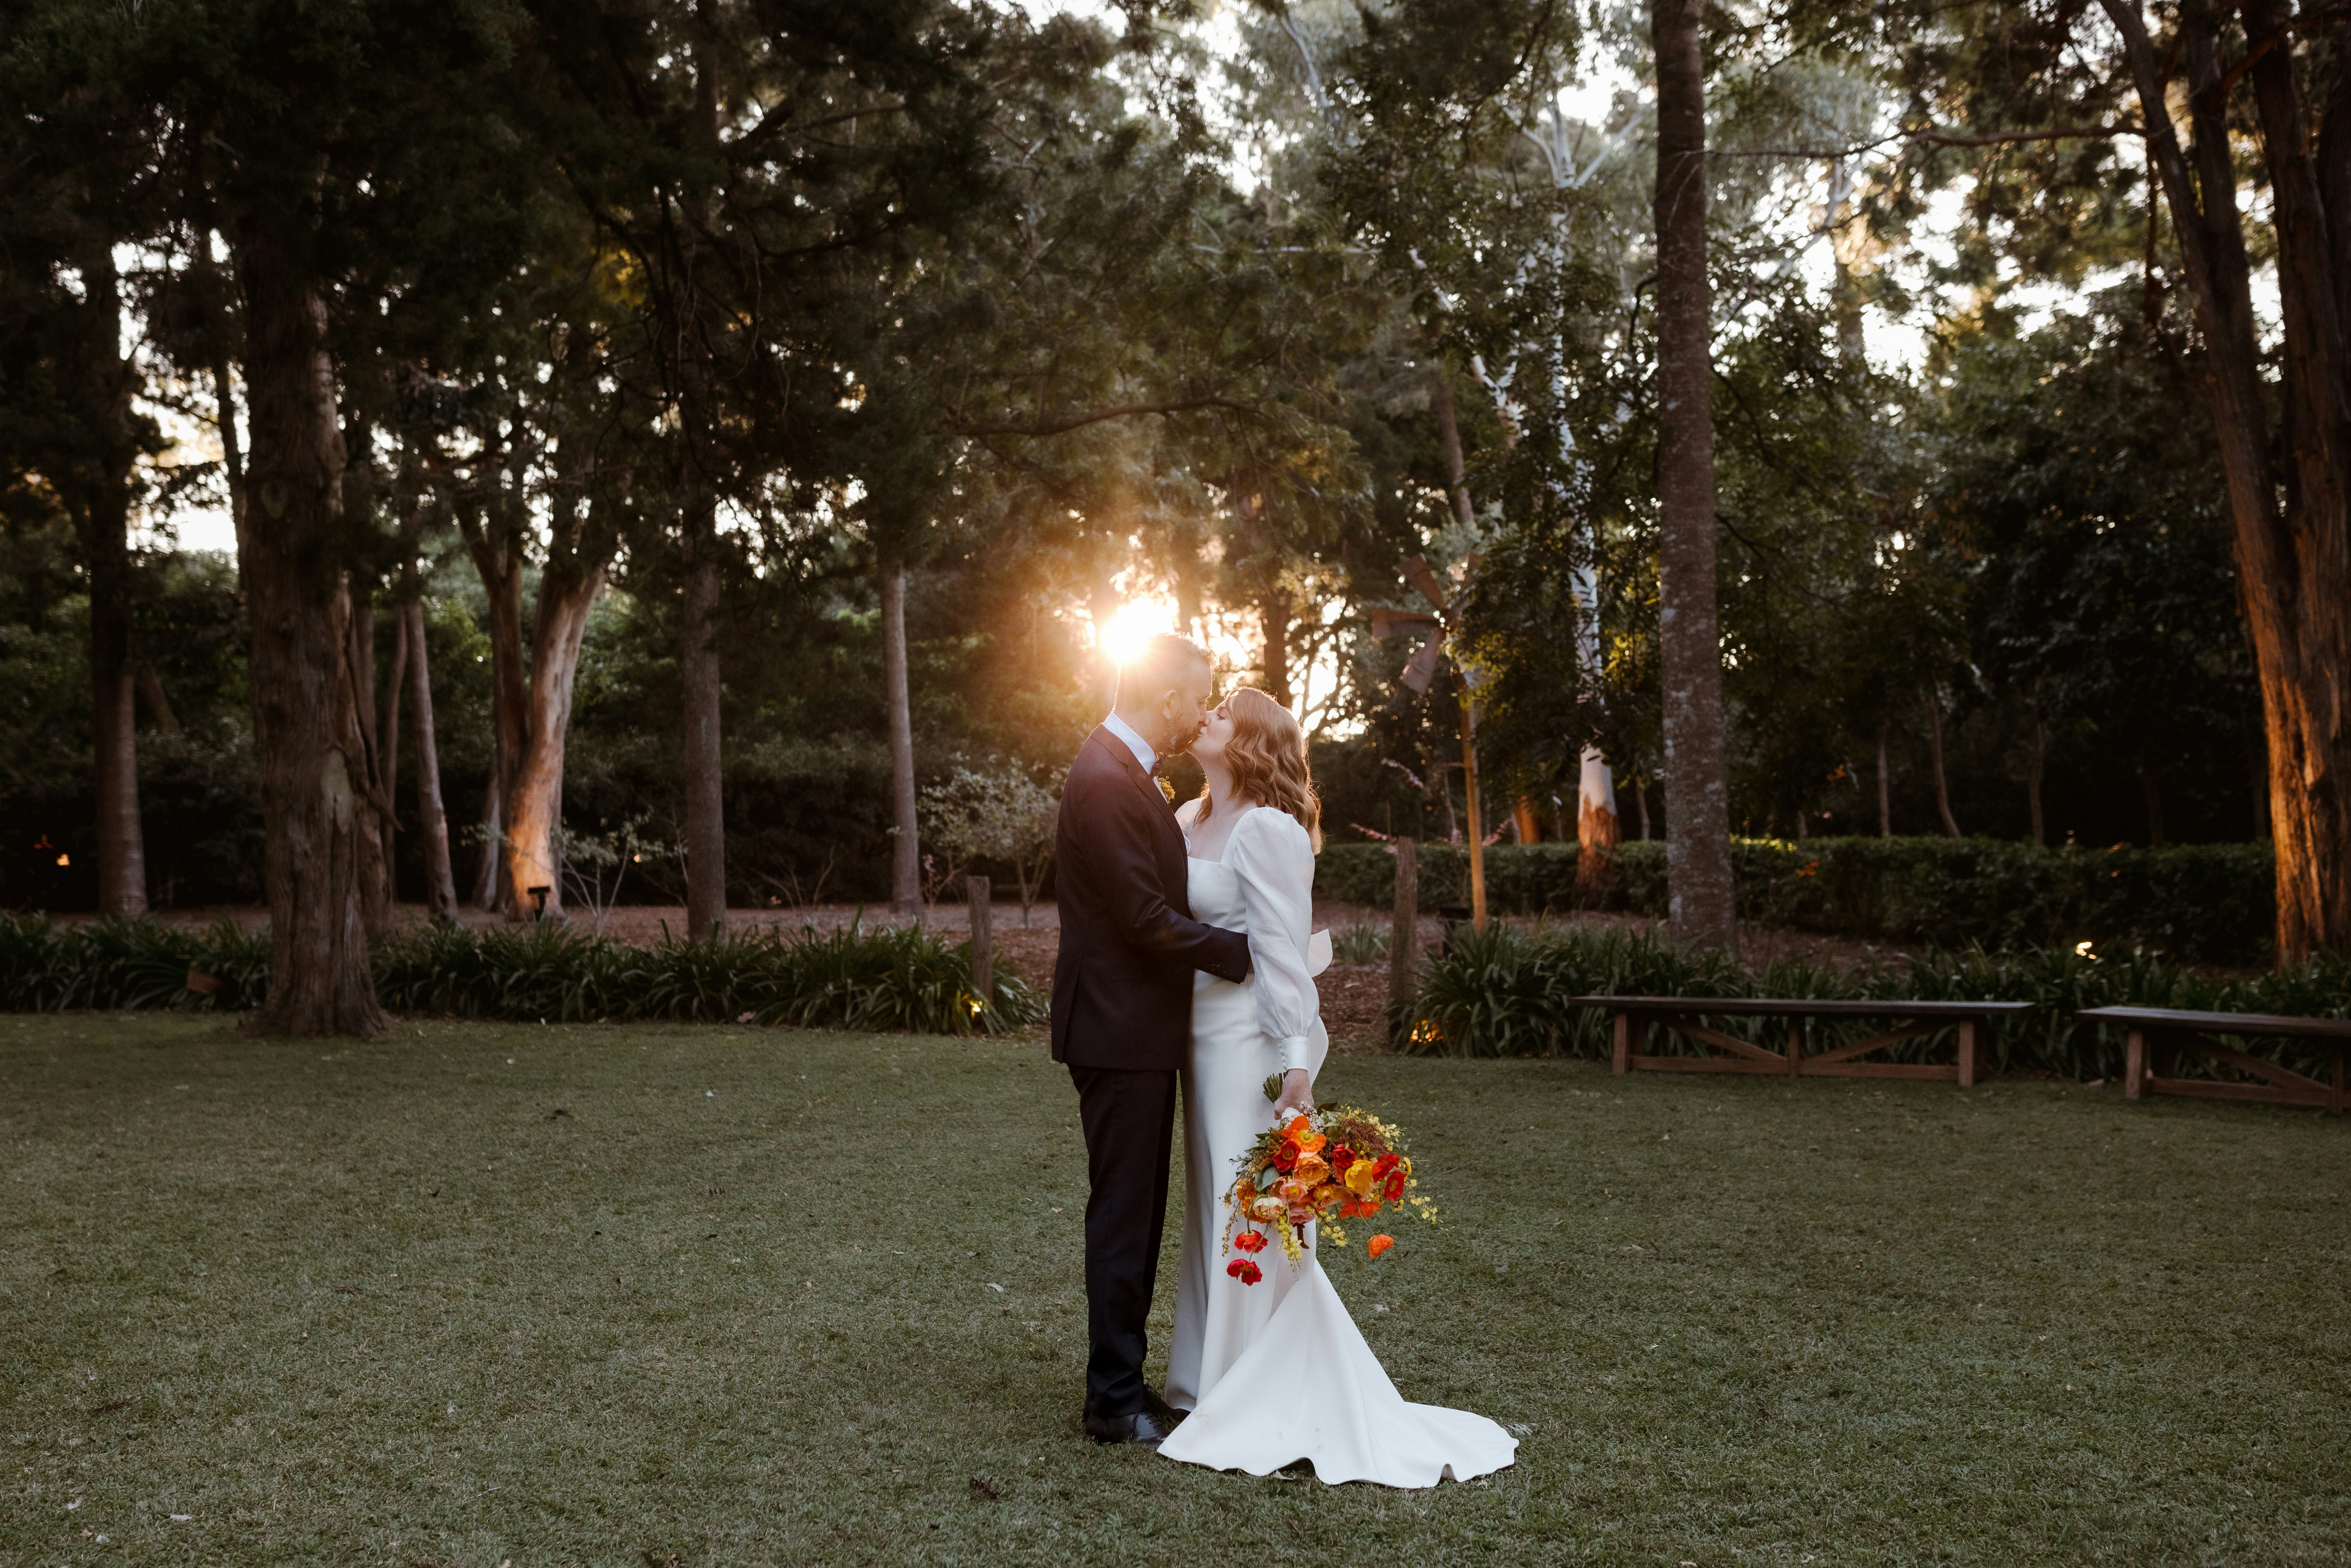 Bride & groom embracing at sunset